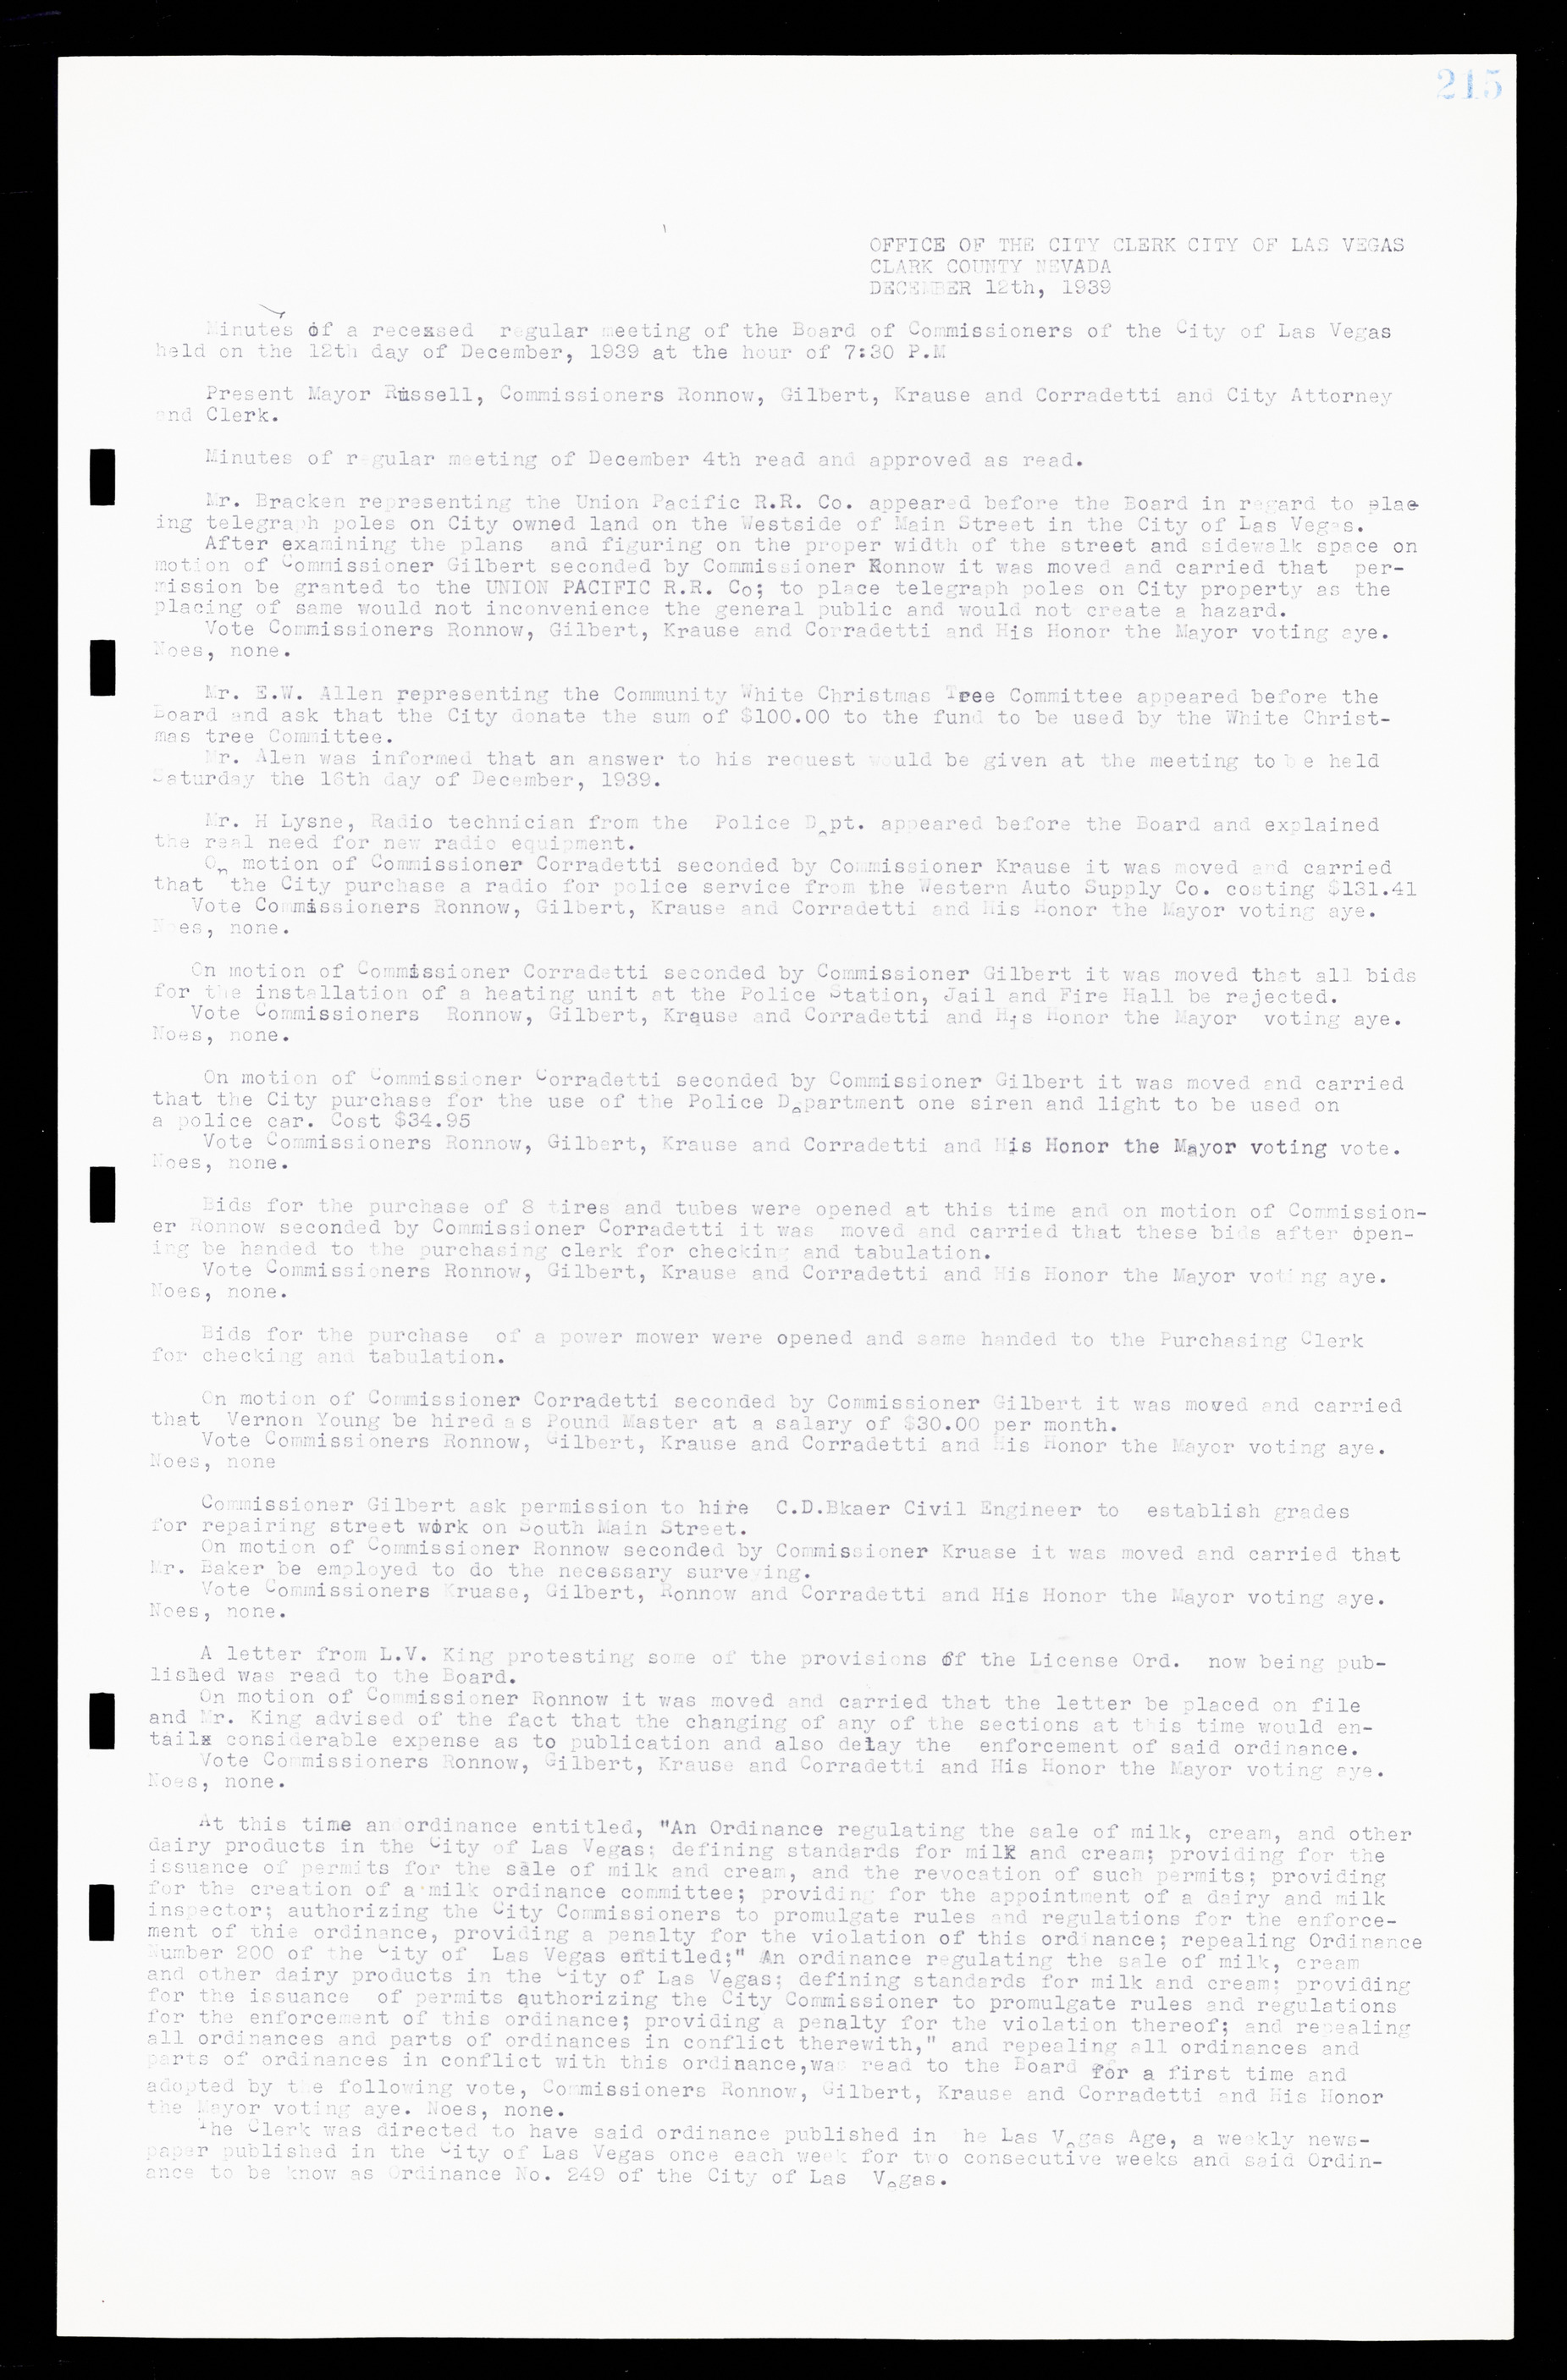 Las Vegas City Commission Minutes, February 17, 1937 to August 4, 1942, lvc000004-233